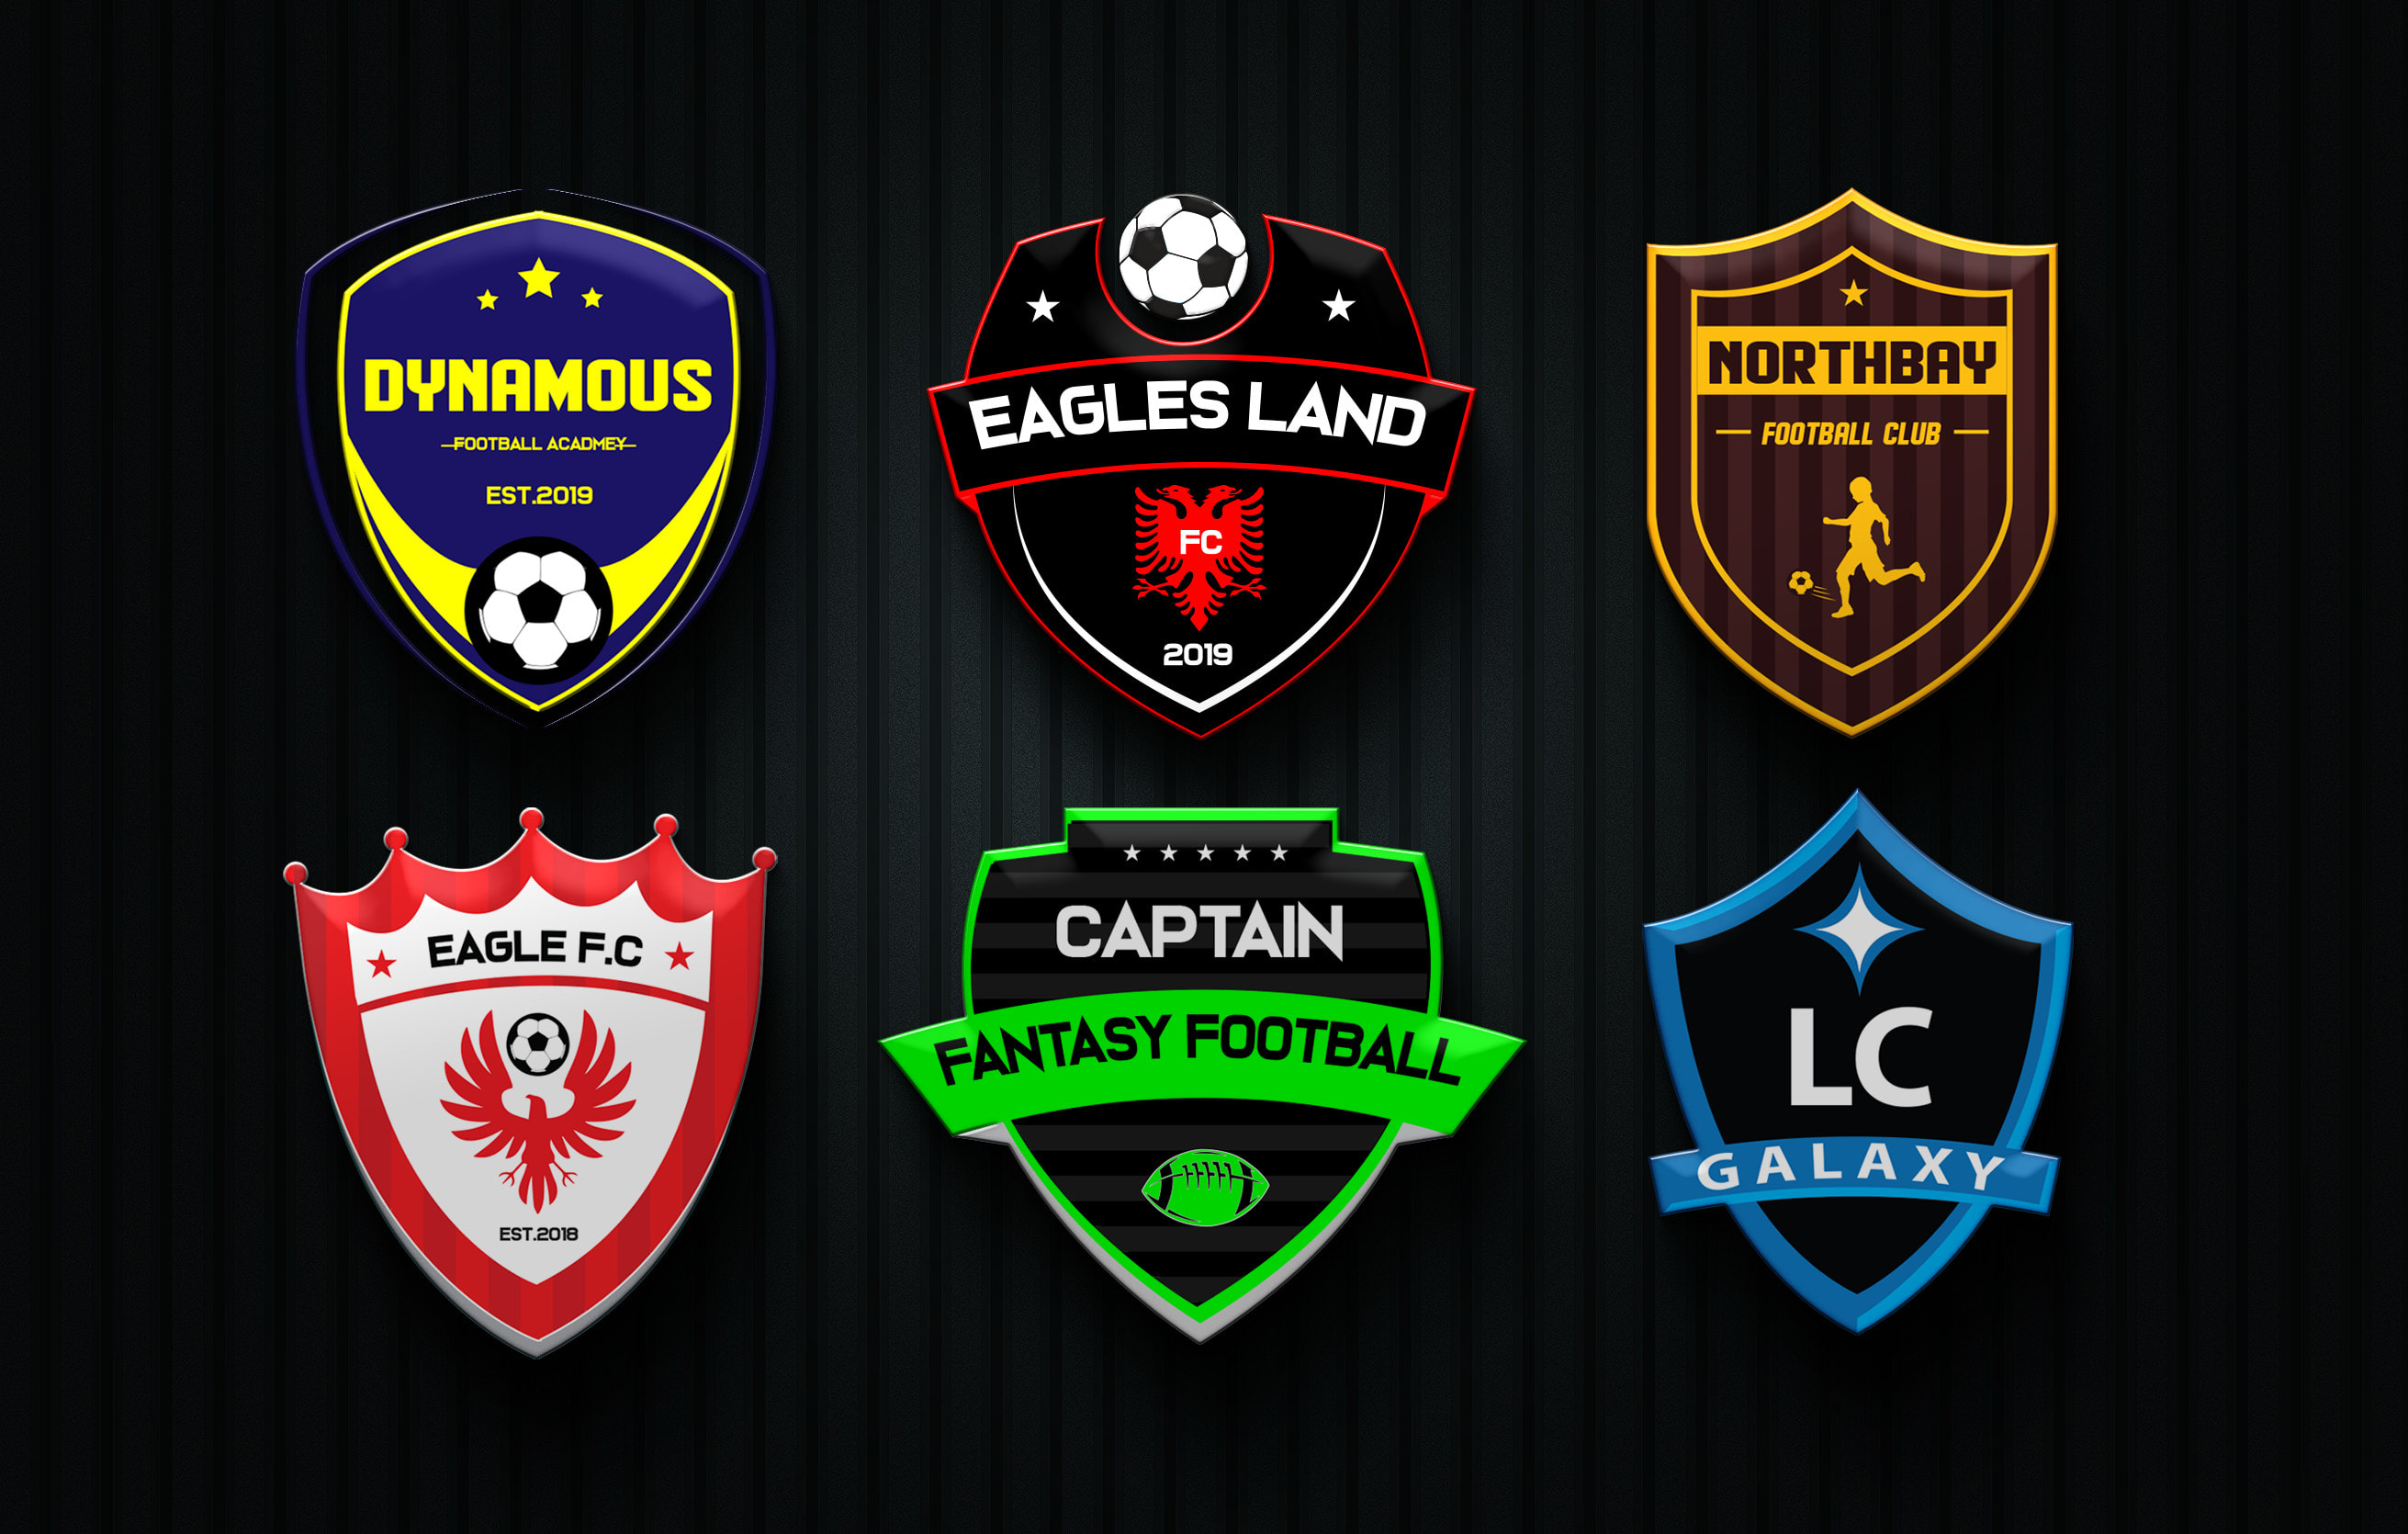 Football Logo Design Ideas